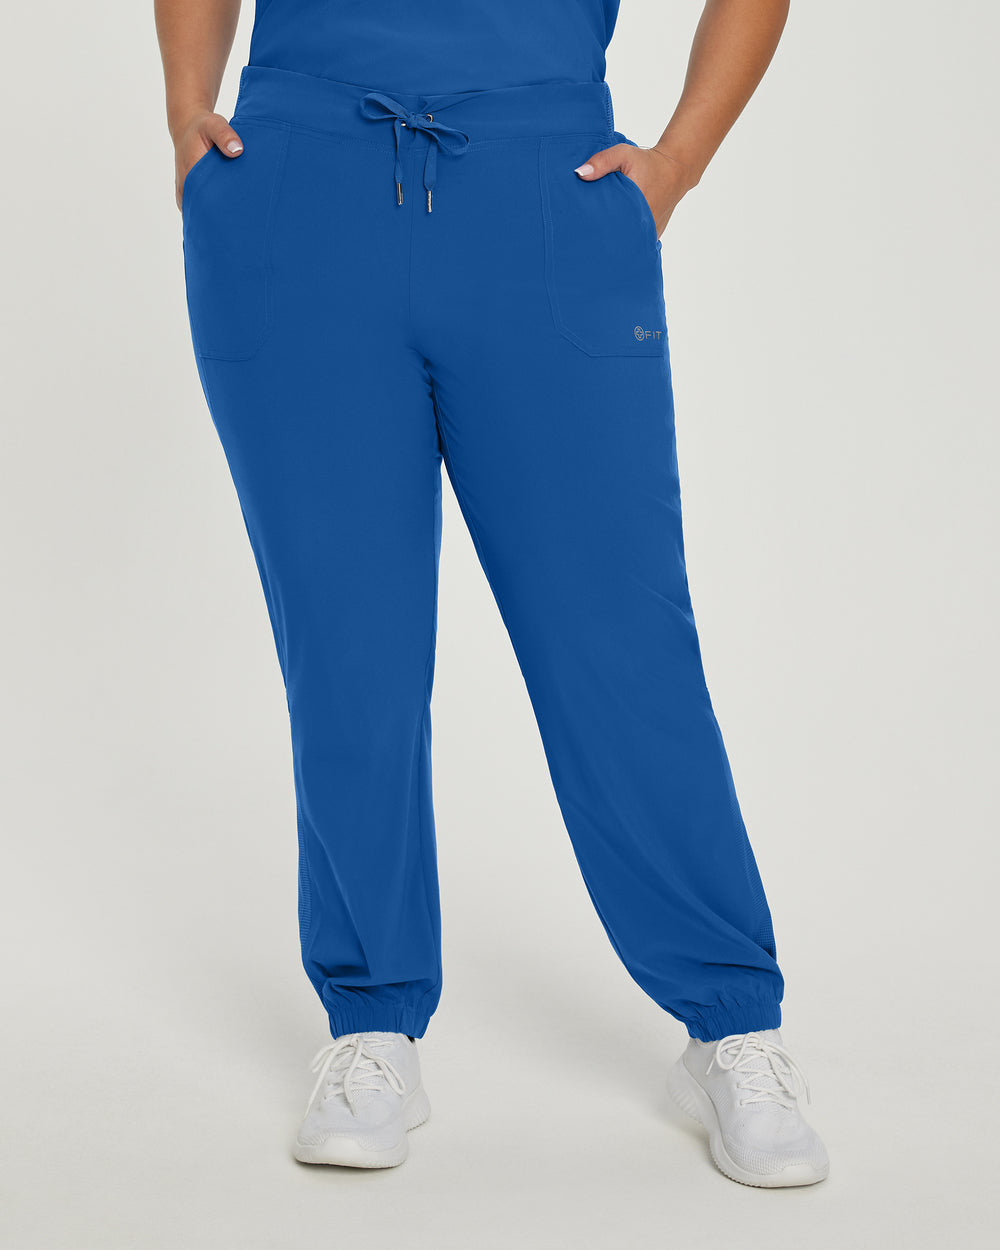 Women's jogger pants - FIT - 399 regular length